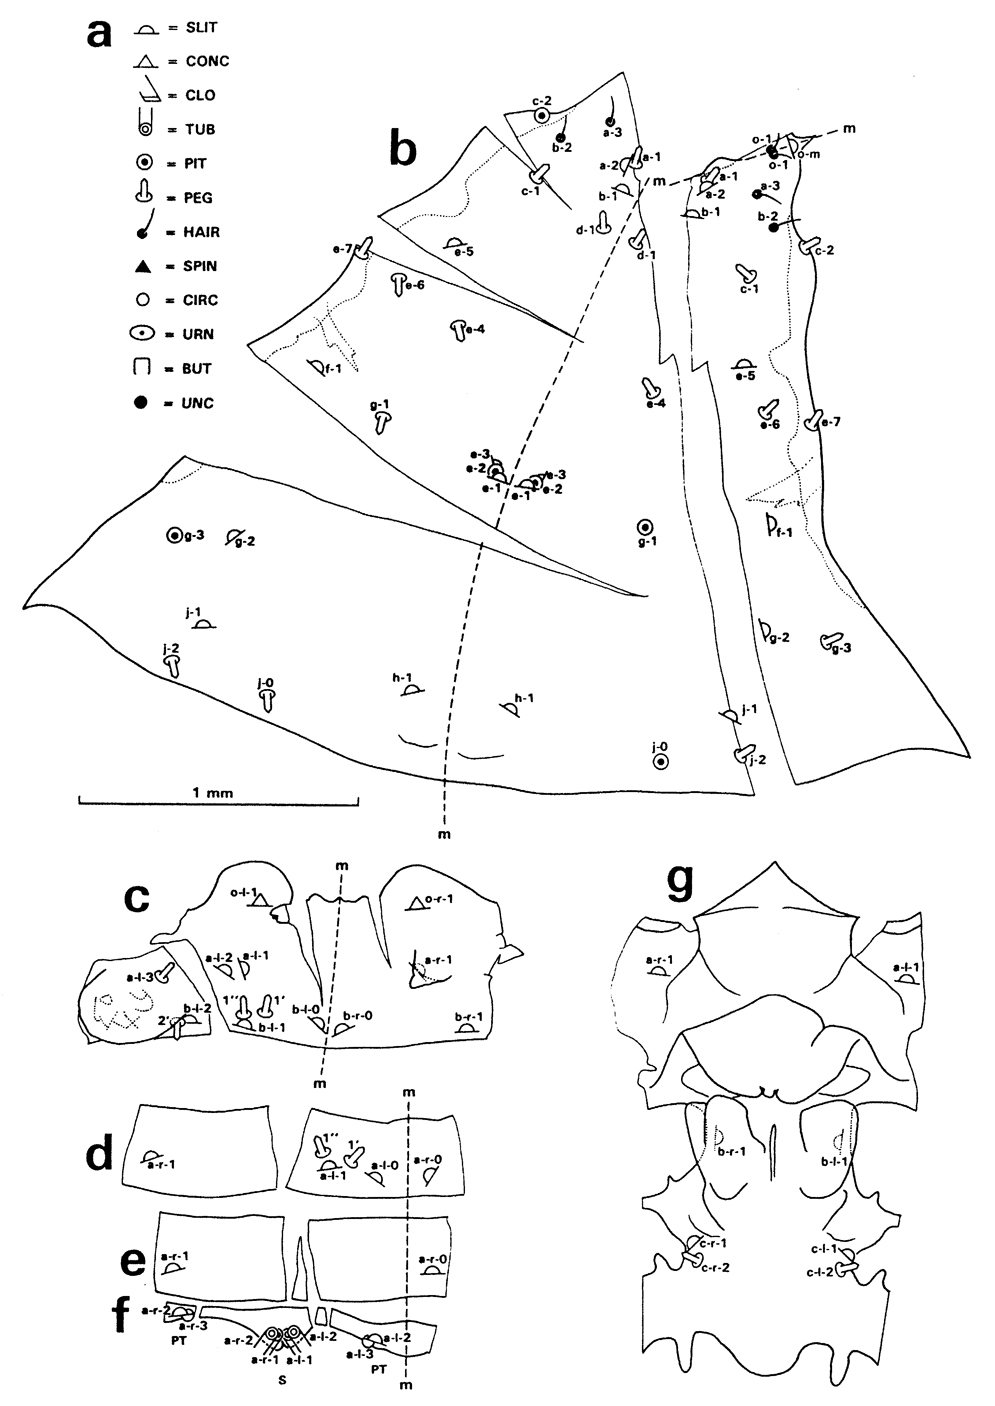 Species Undeuchaeta incisa - Plate 28 of morphological figures